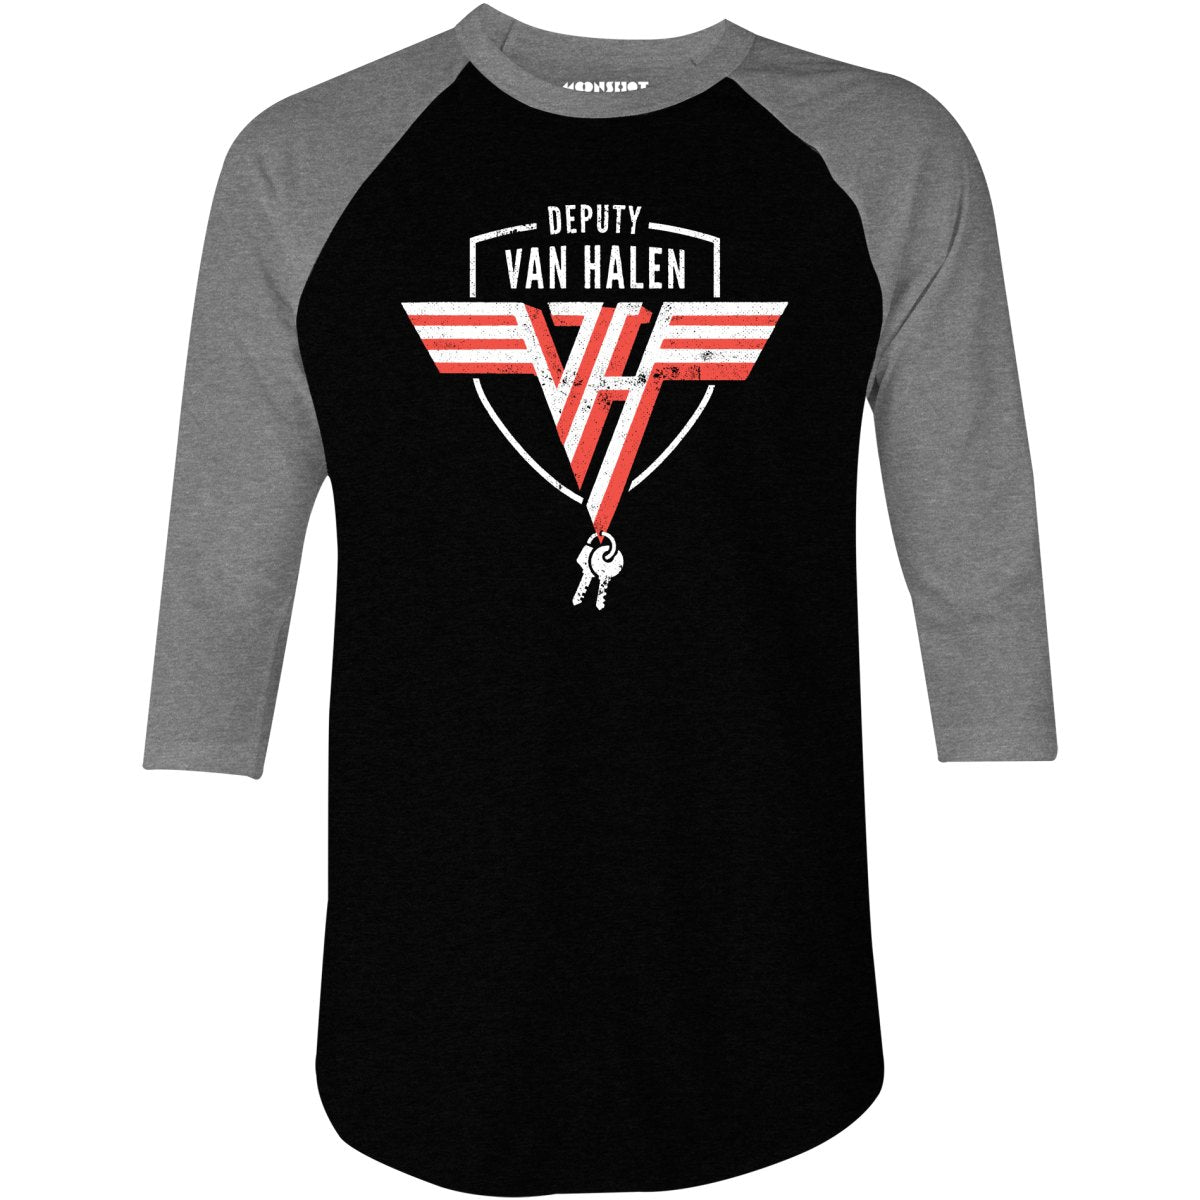 Deputy Van Halen - 3/4 Sleeve Raglan T-Shirt